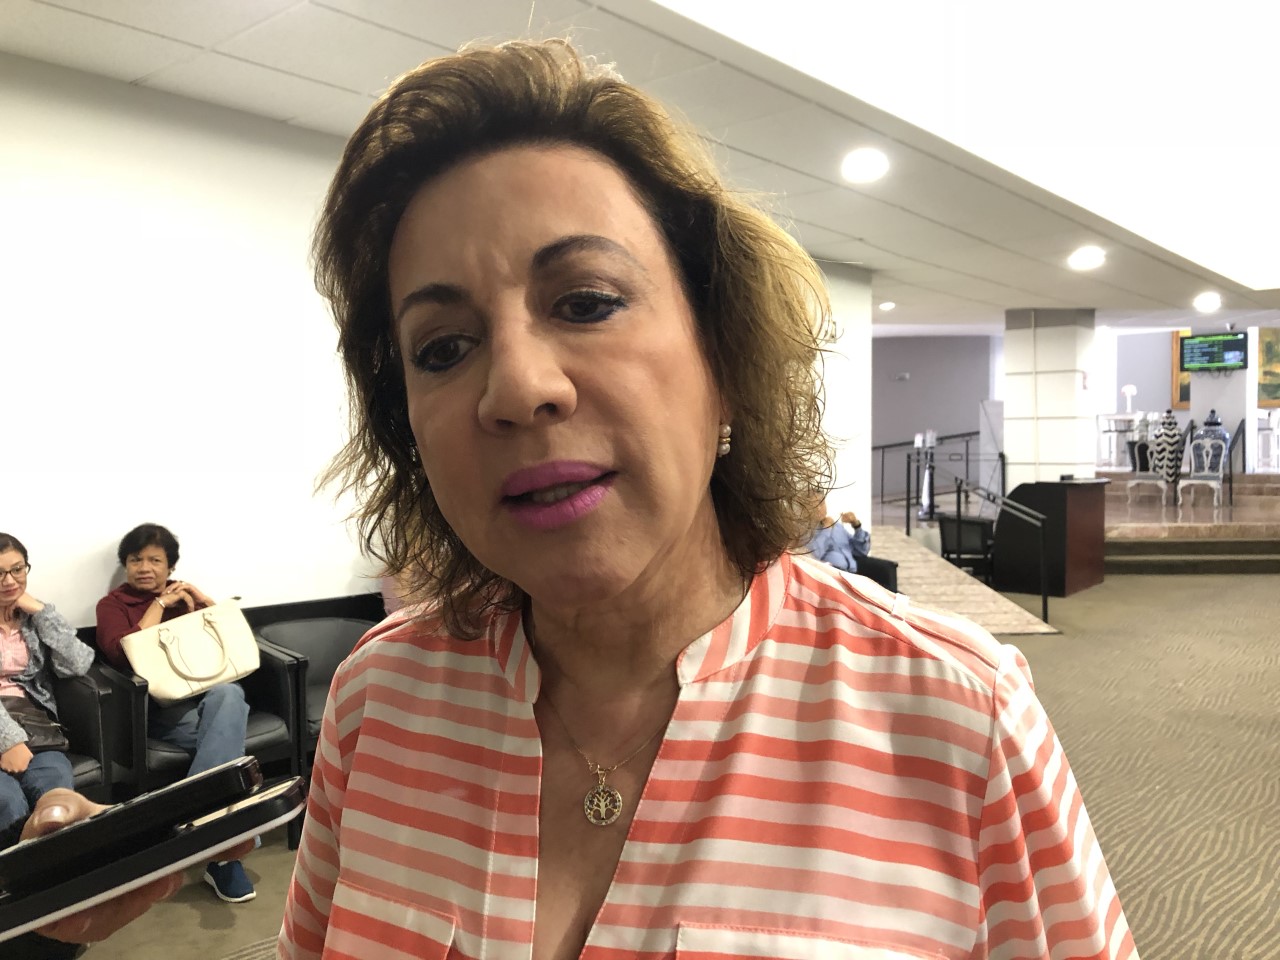  Ruptura de Calderón hará daño a la oposición en México: Guadalupe Murguía